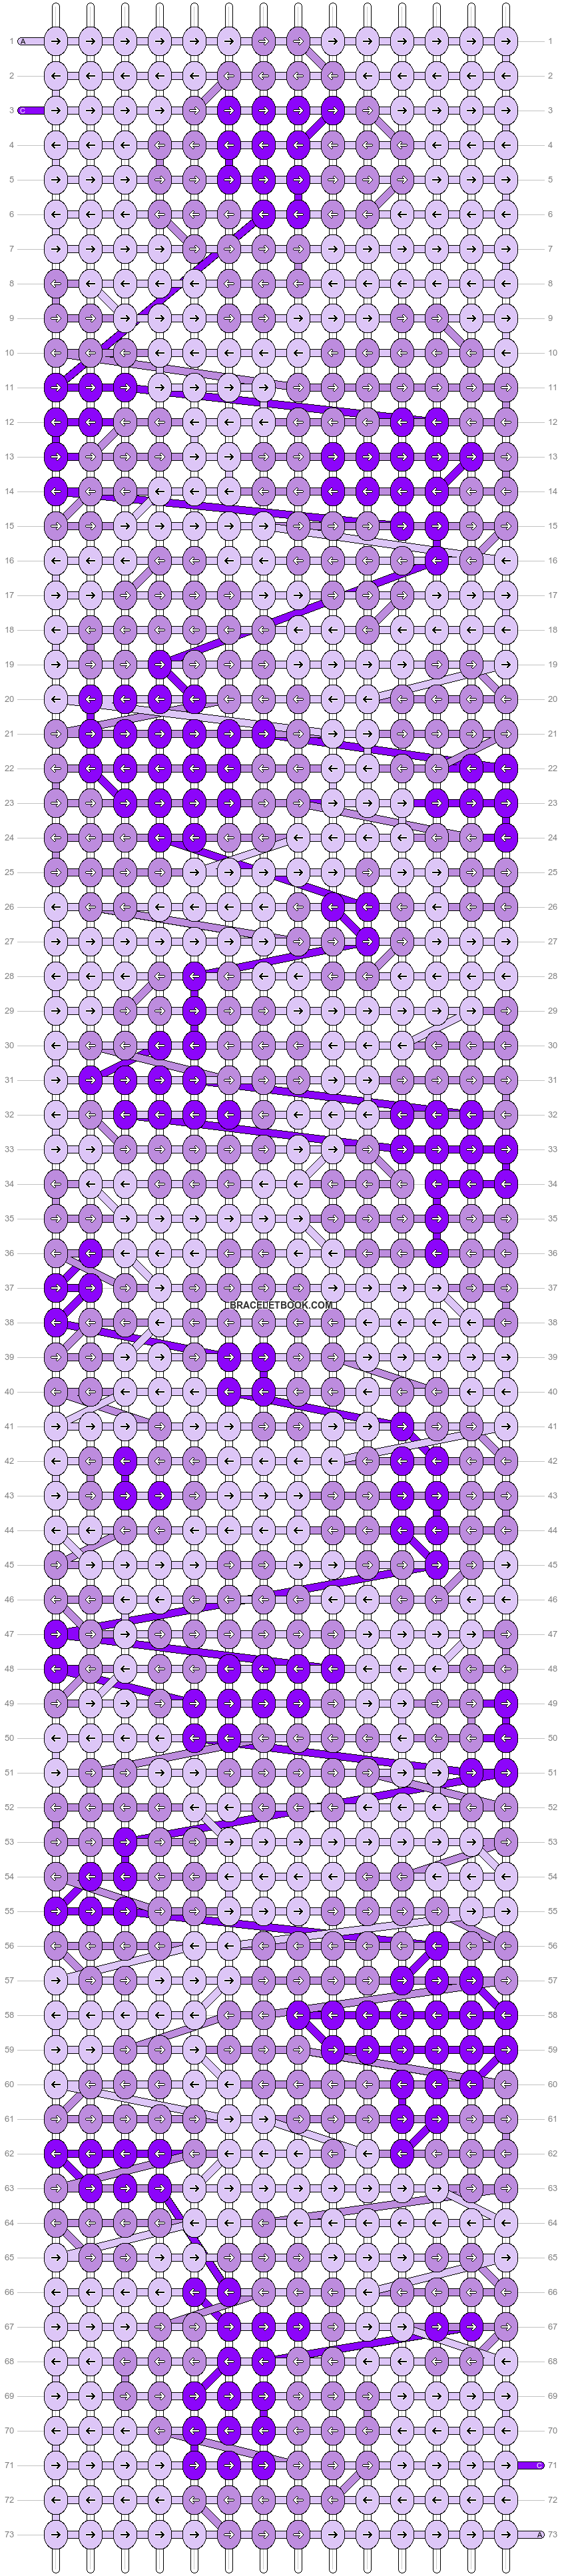 Alpha pattern #31062 variation #60388 pattern